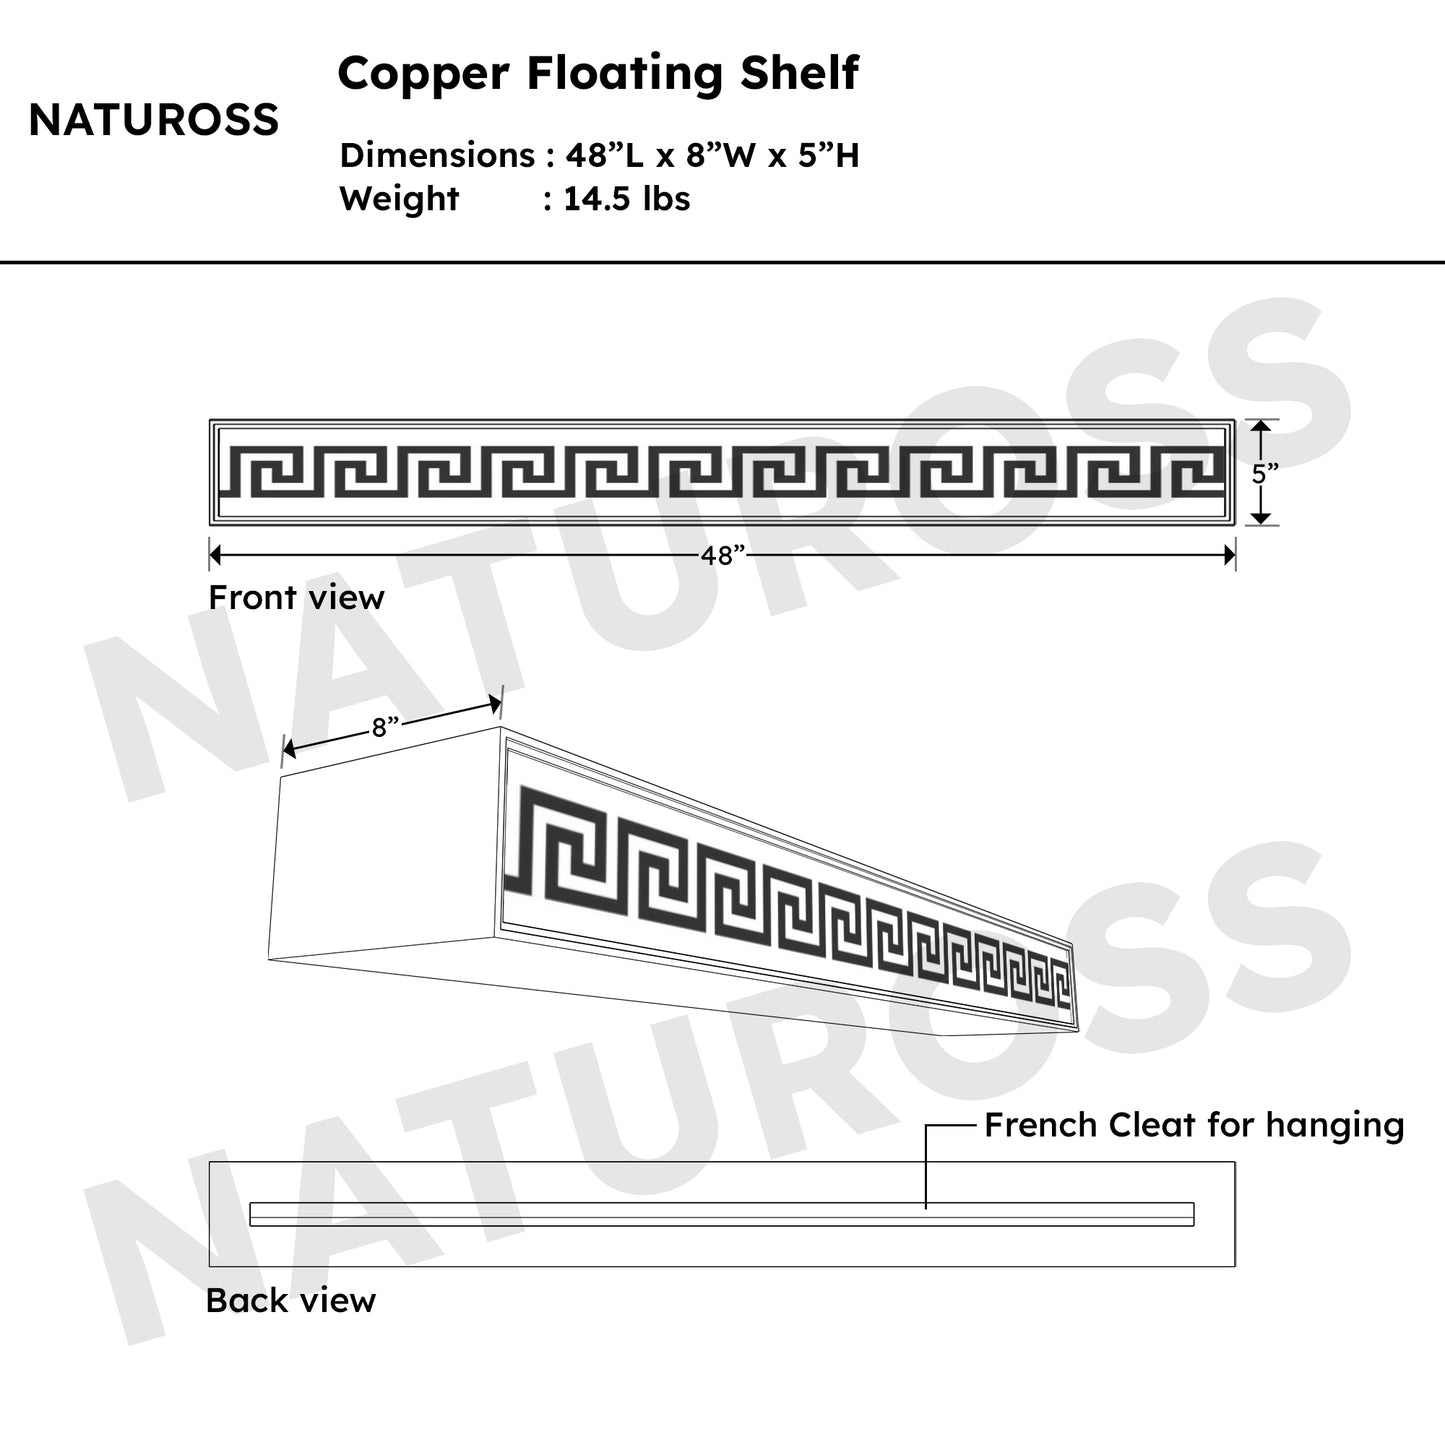 Copper Floating Shelf